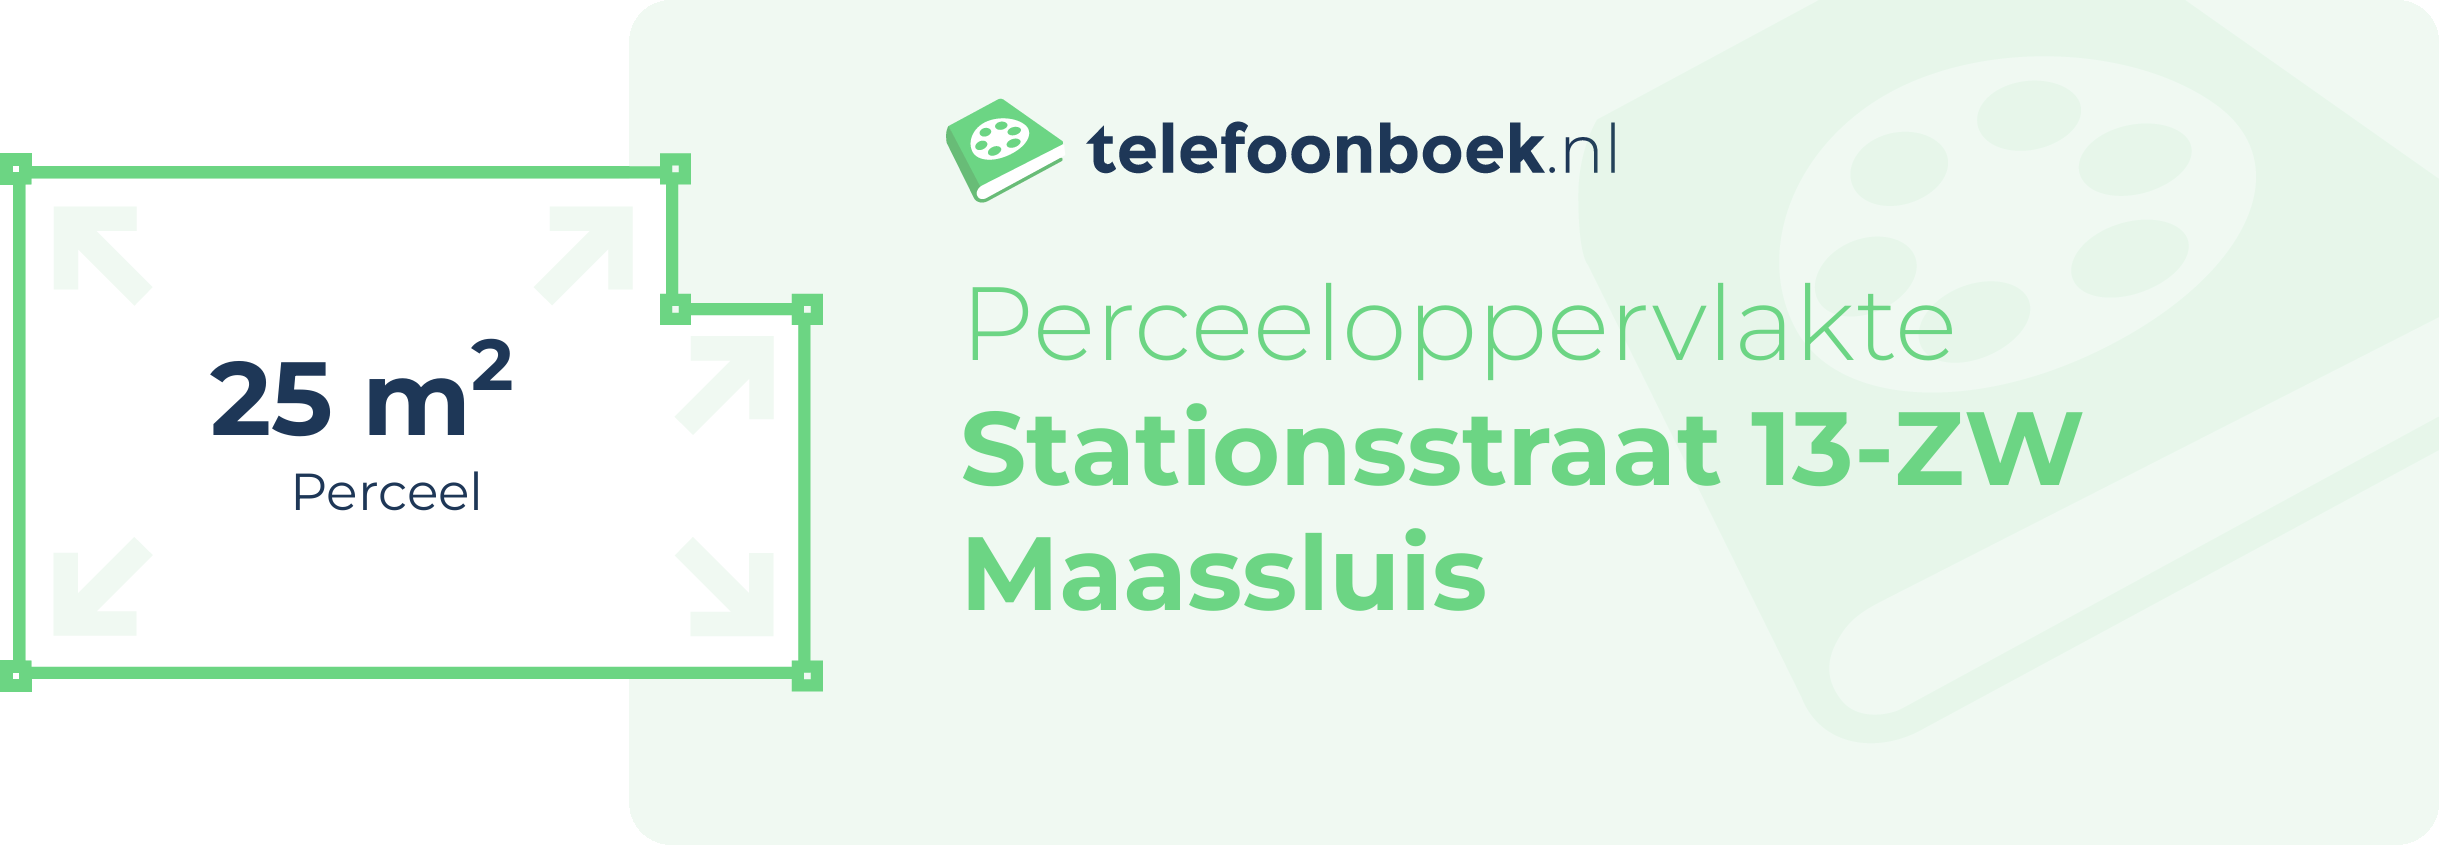 Perceeloppervlakte Stationsstraat 13-ZW Maassluis